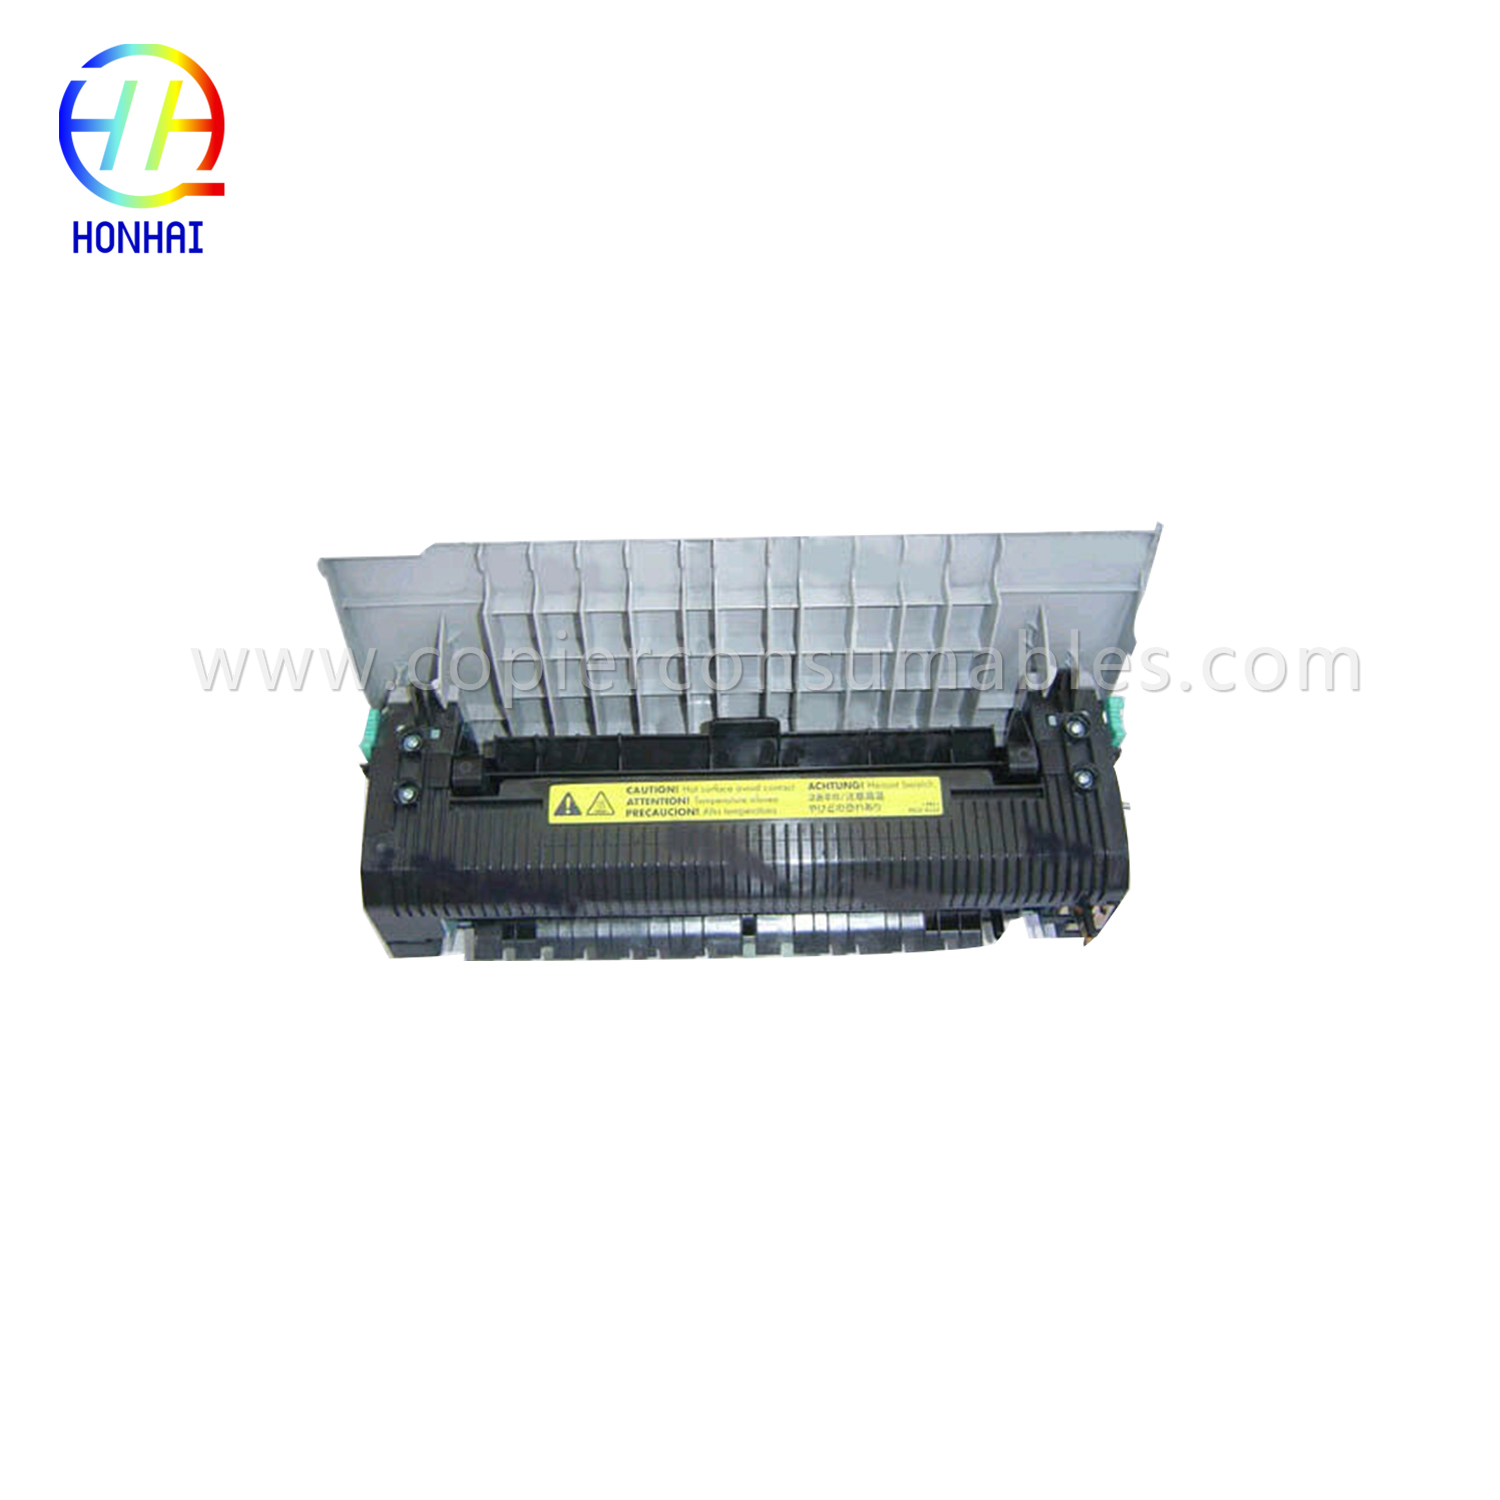 Фьюзер для HP Color LaserJet 2550 2550L 2550ln 2550n (RG5-7572-110Cn)